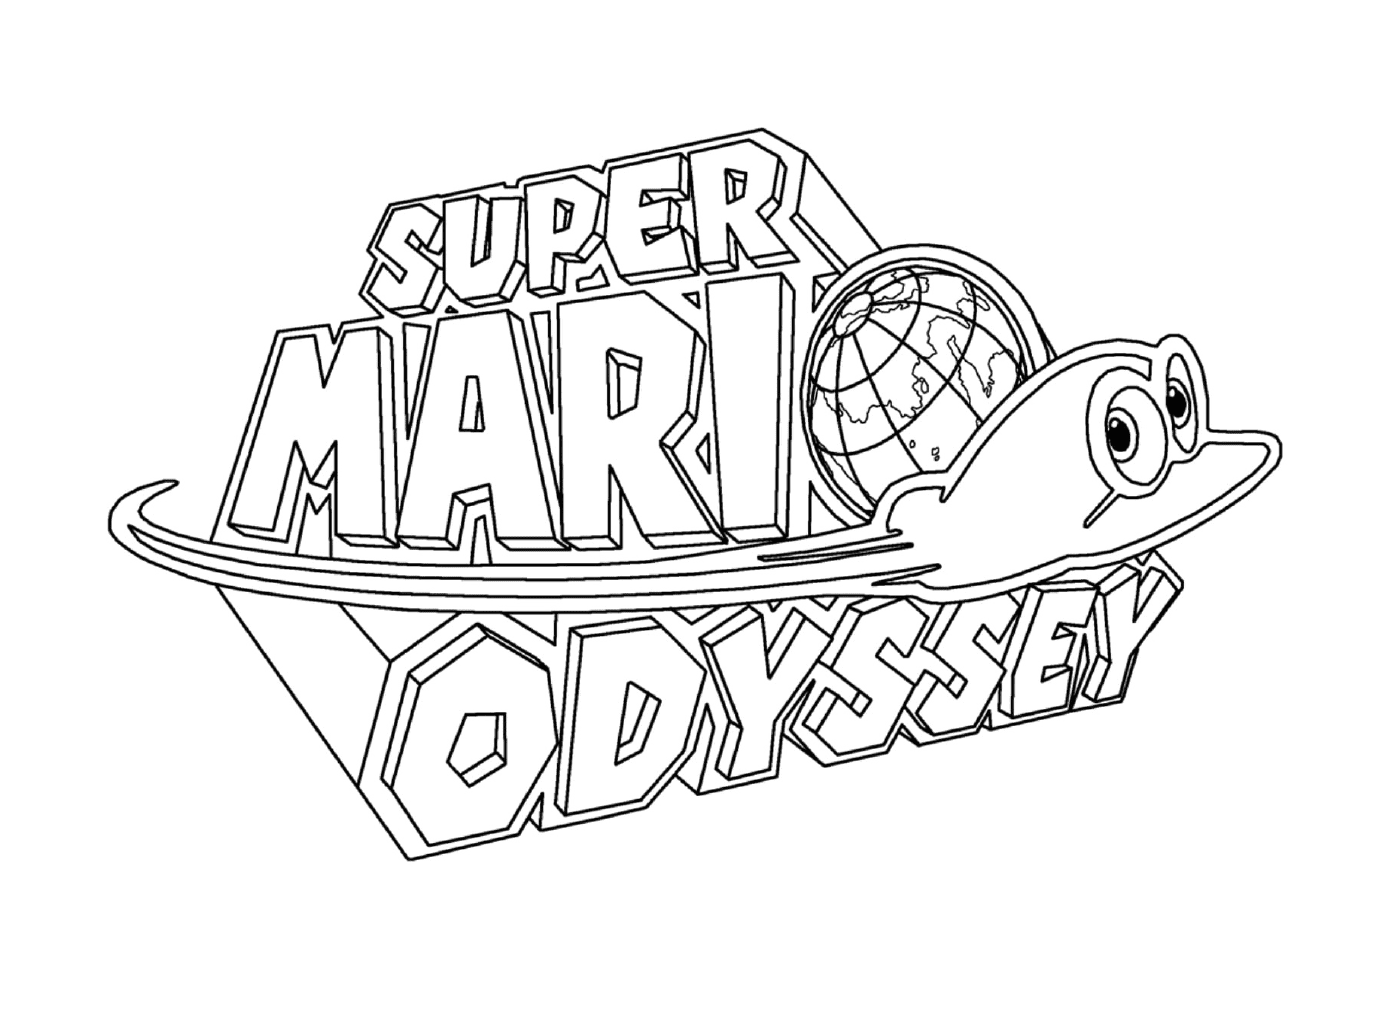  Logo Super Mario Odyssey di Nintendo 